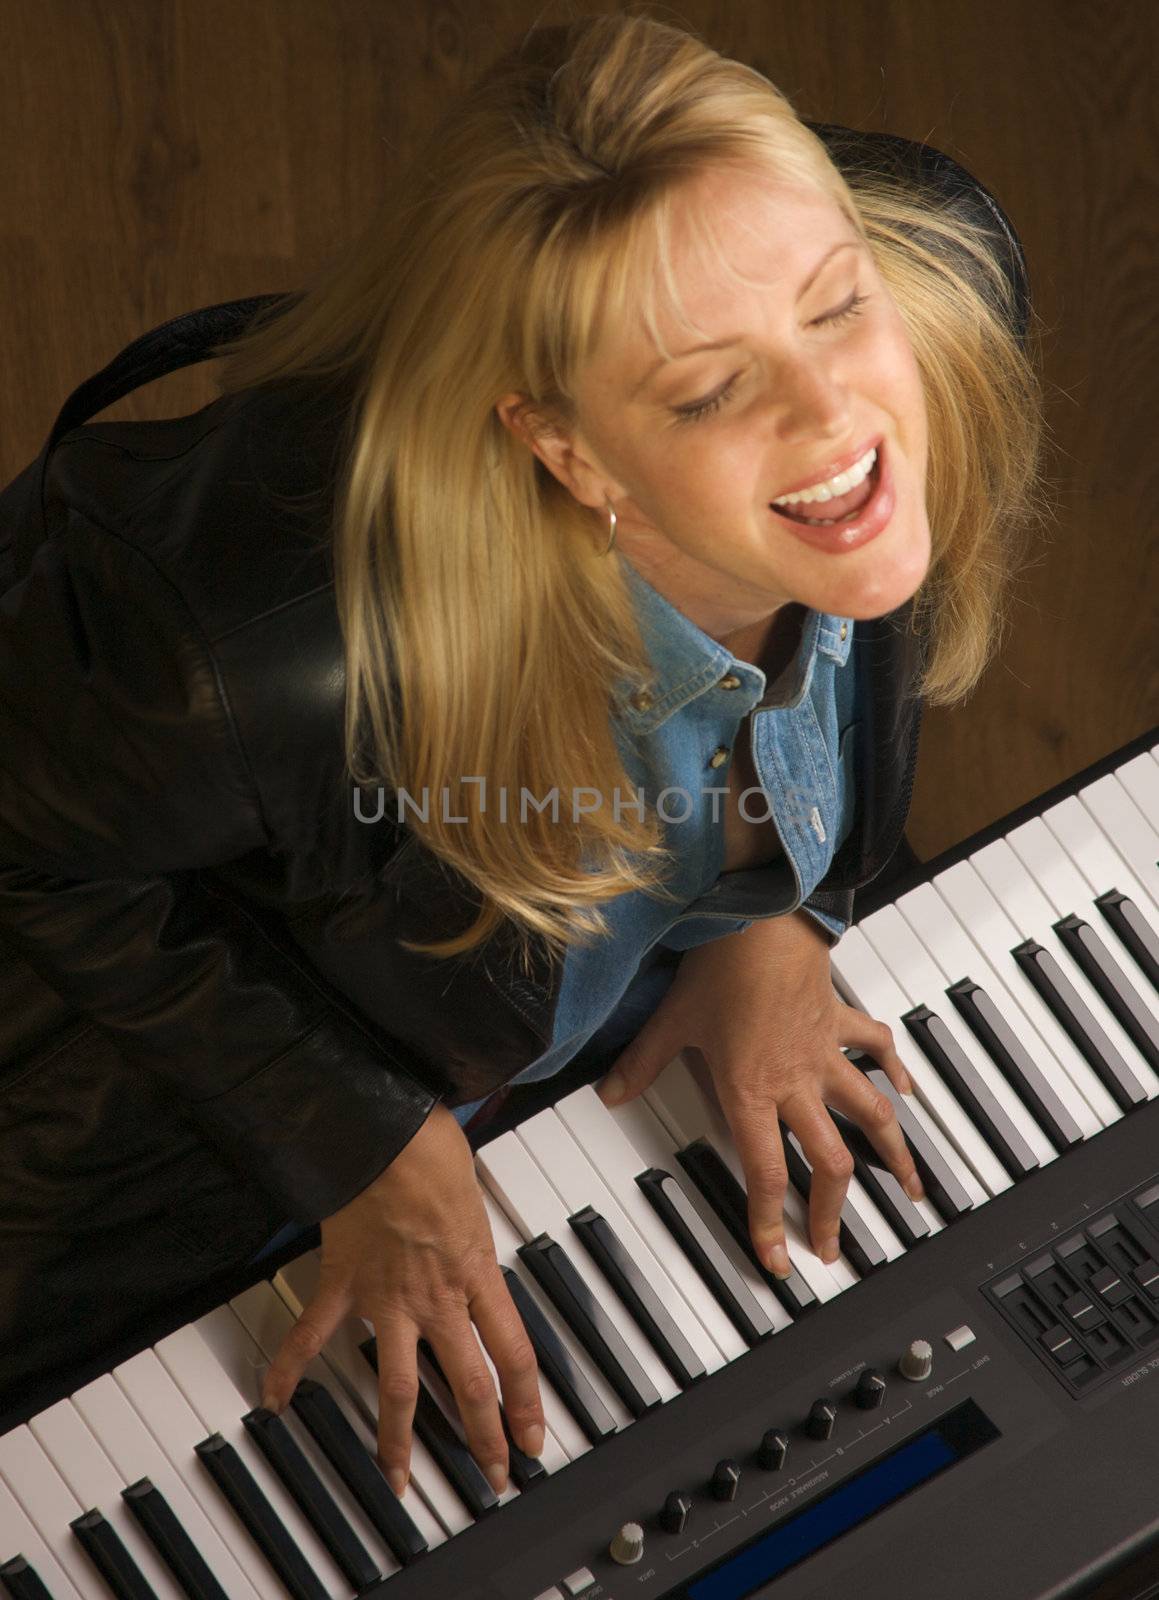 Femal Musician Sings While Playing Digital Piano